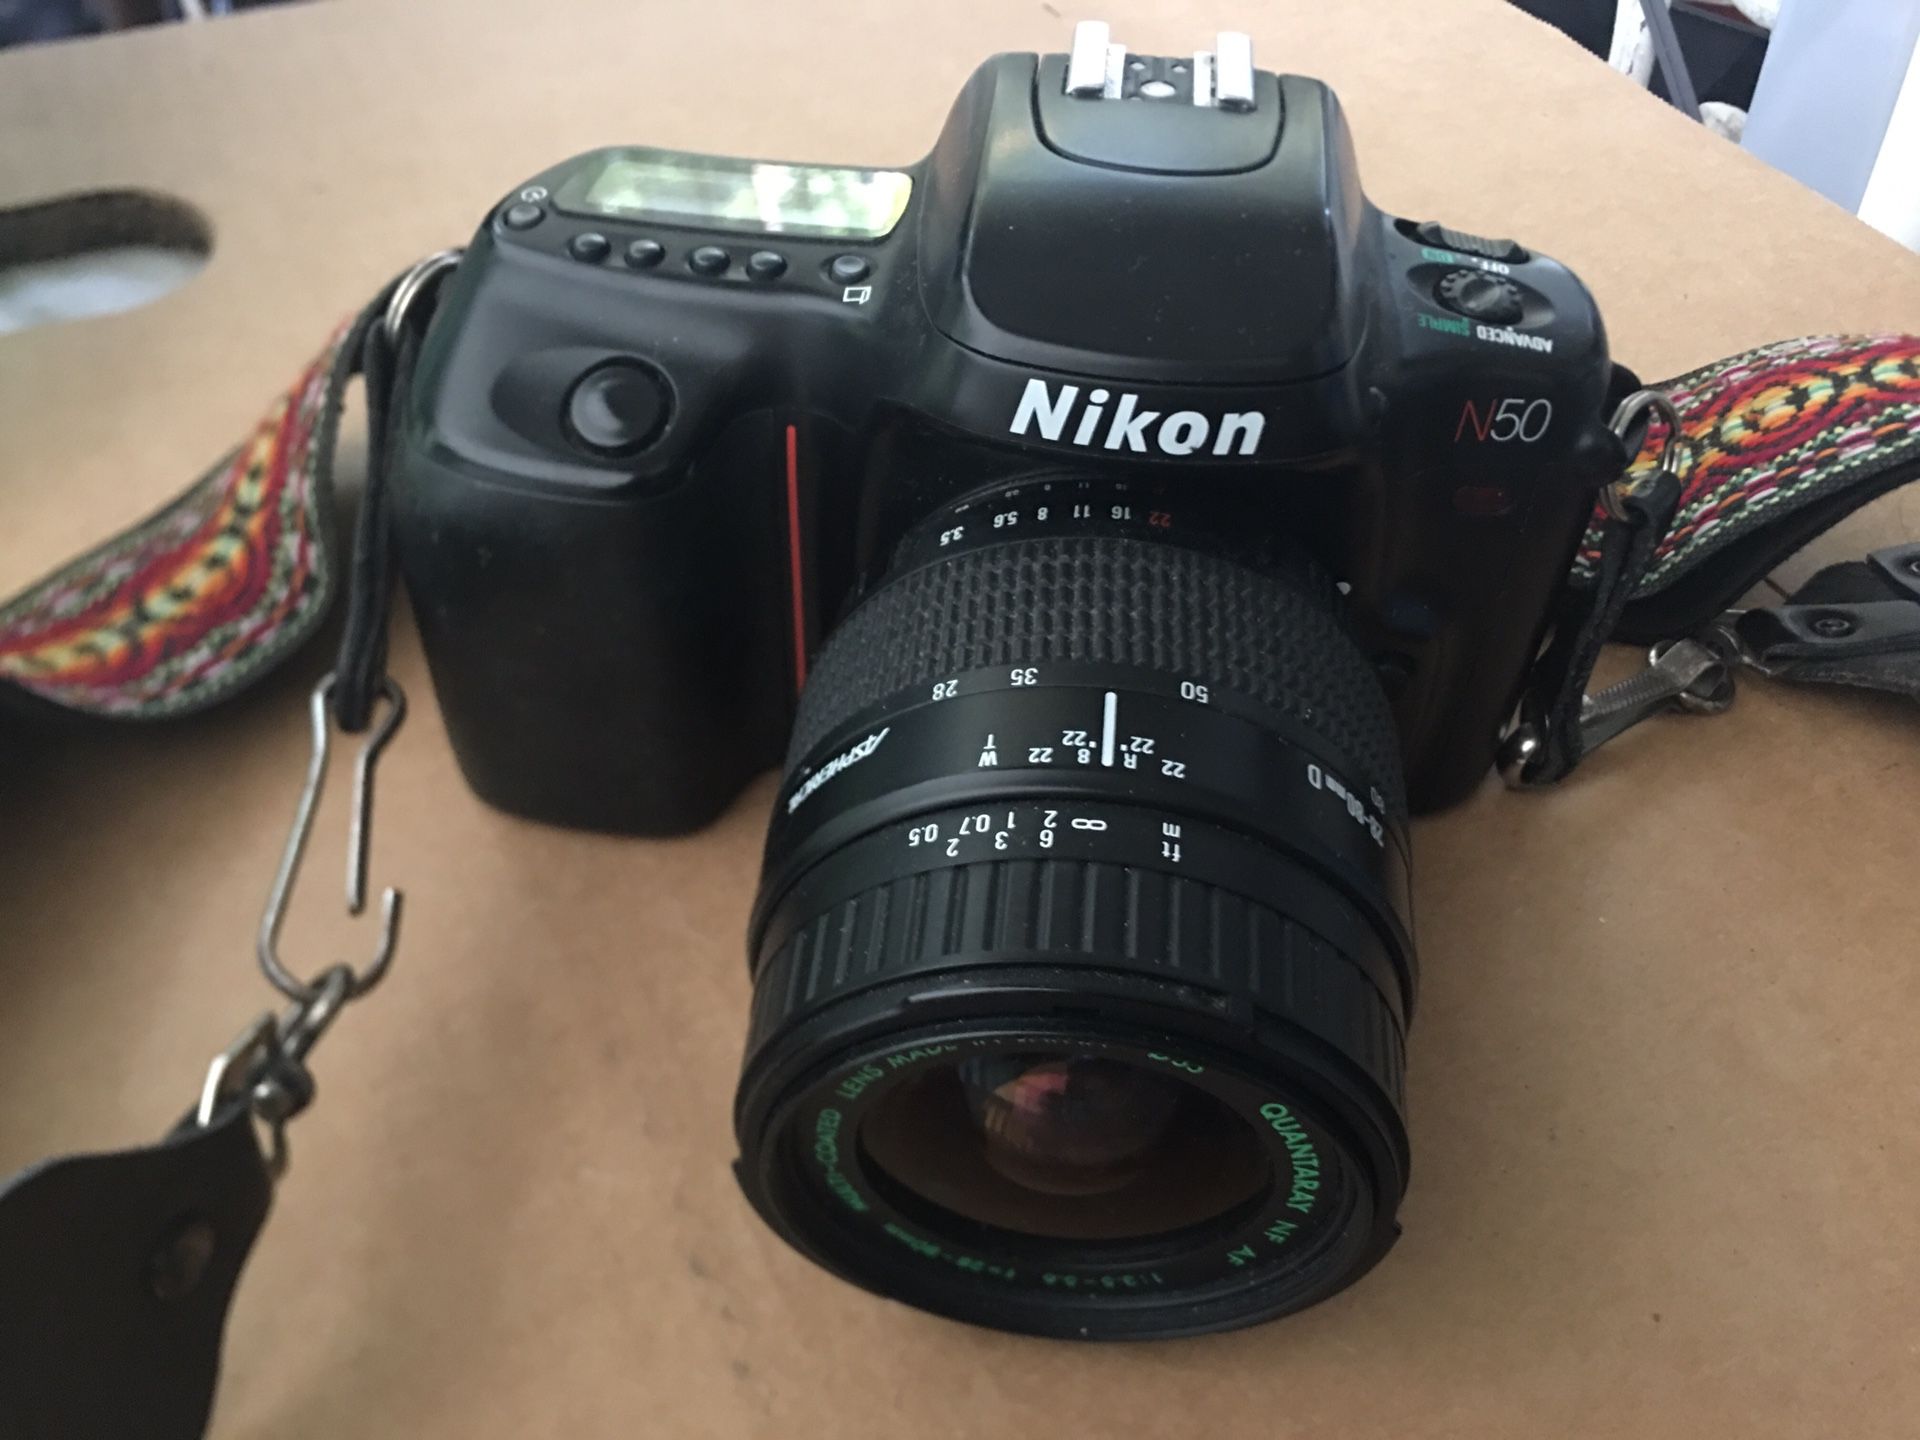 Nikon N50 camera. NOT digital